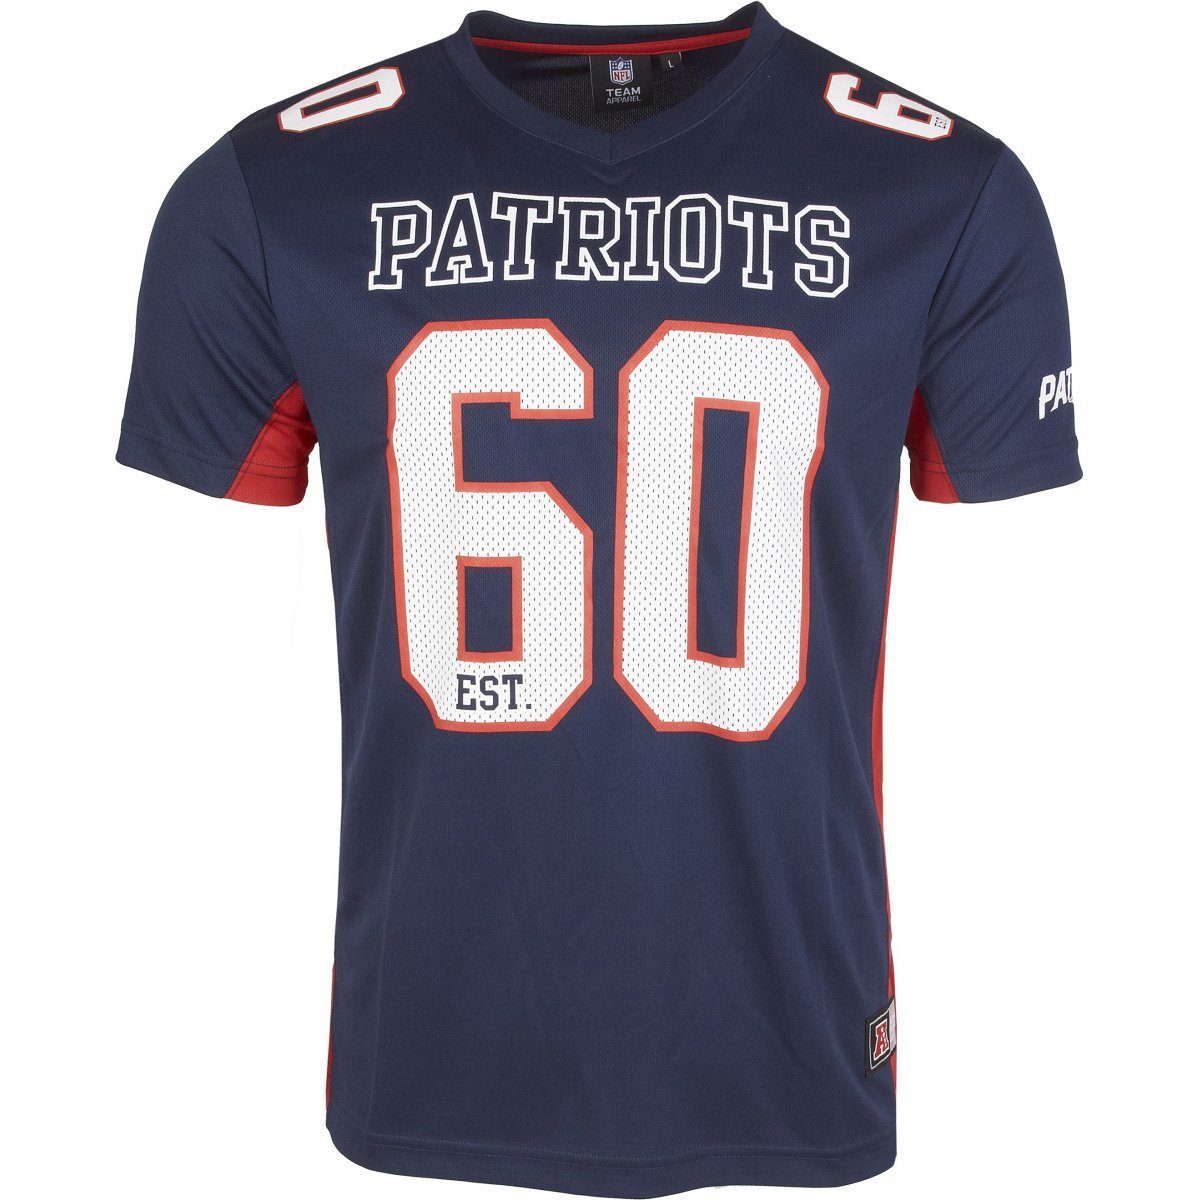 Fanatics Print-Shirt Jersey New Patriots England